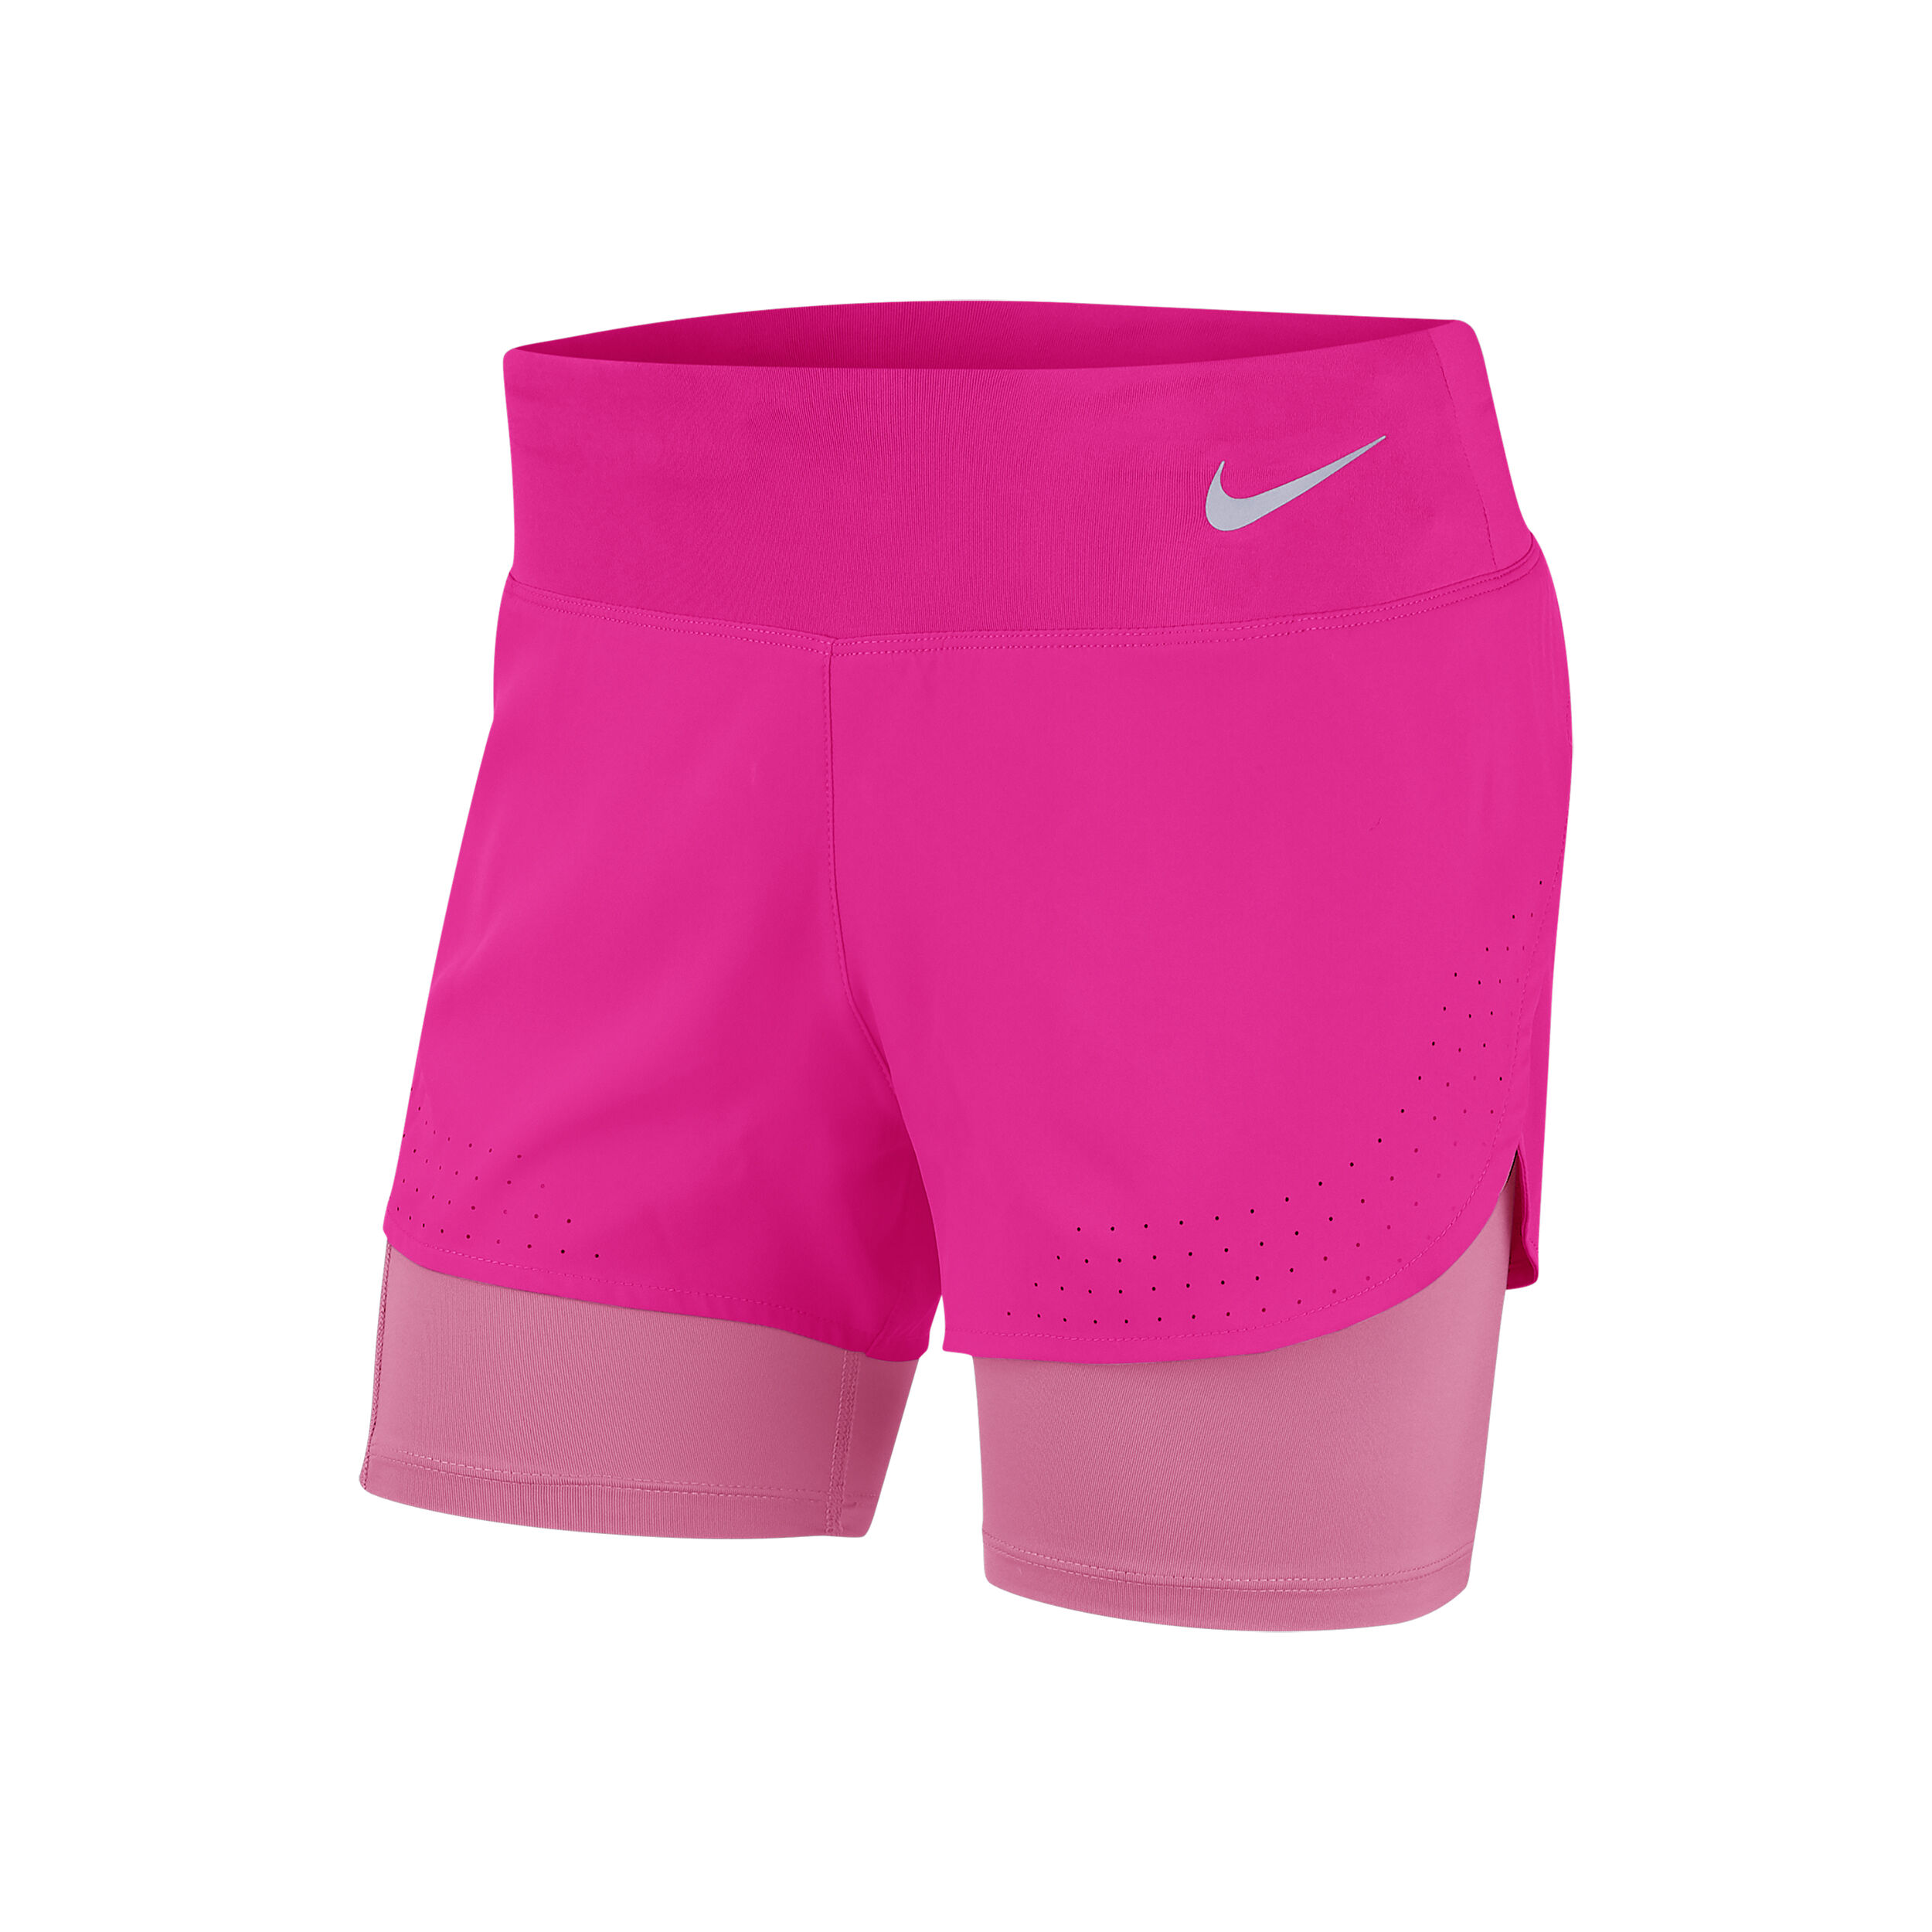 nike eclipse shorts pink